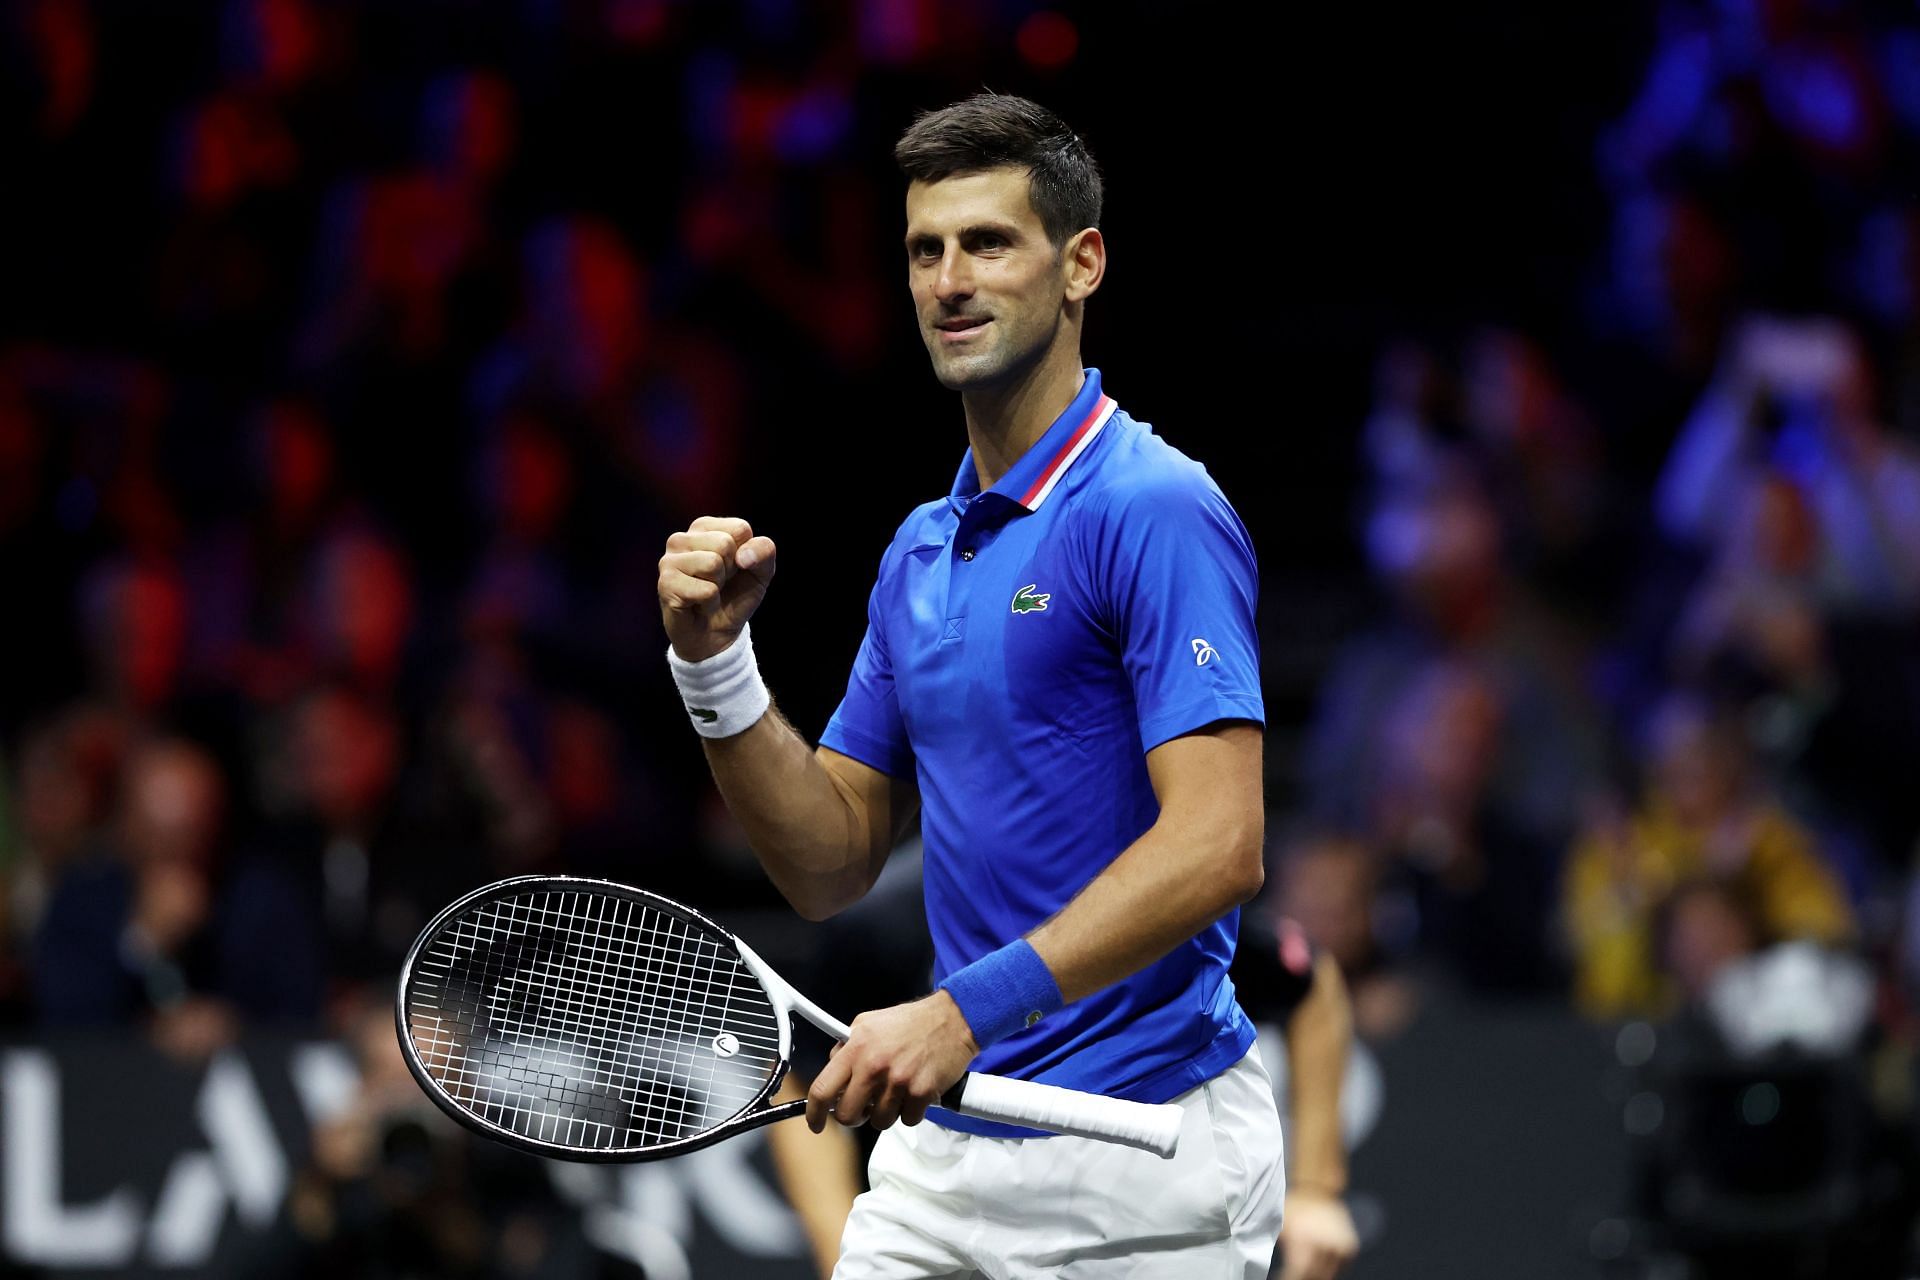 Novak Djokovics next match Opponent, venue, live streaming, TV channel and schedule Tel Aviv Open 2022 Semifinal